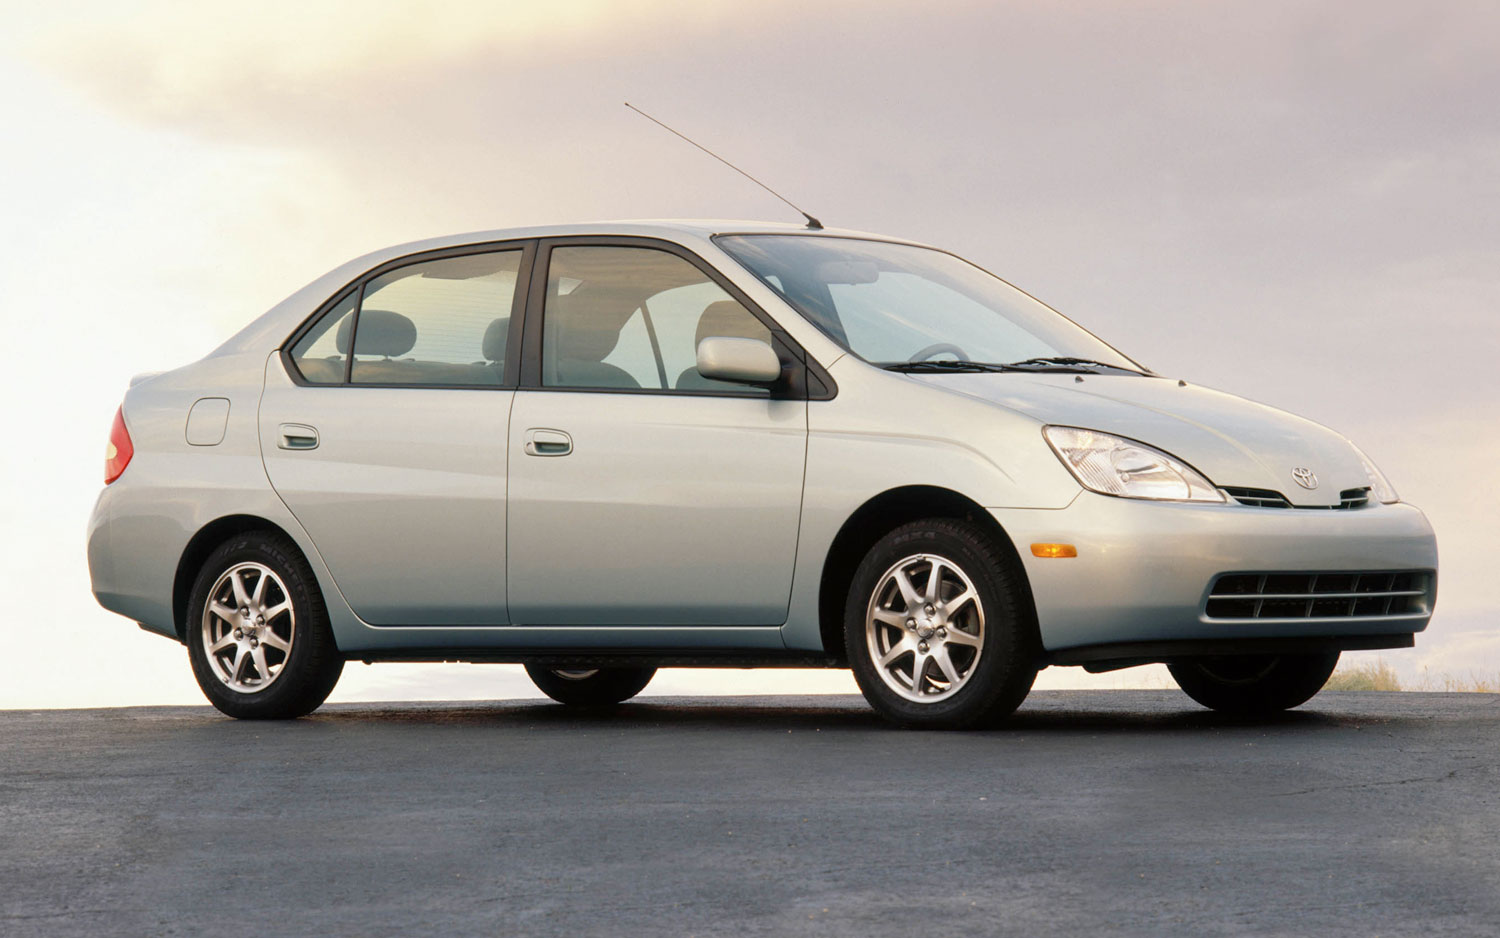 Toyota Recalling 2001-2003 Prius to Fix Steering Issue